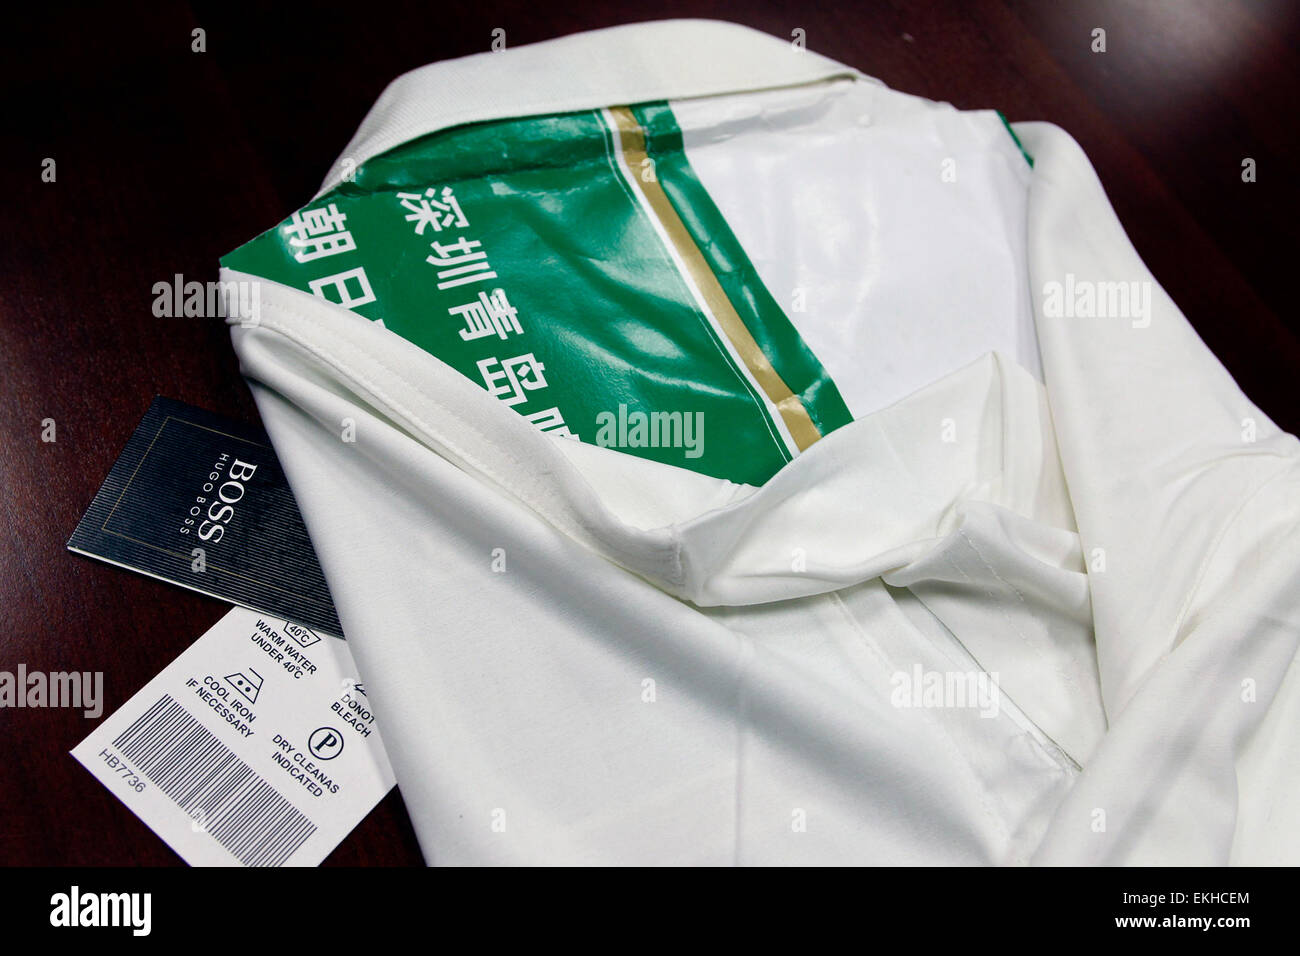 Contraffazione di Hugo Boss Golf Shirt Foto stock - Alamy